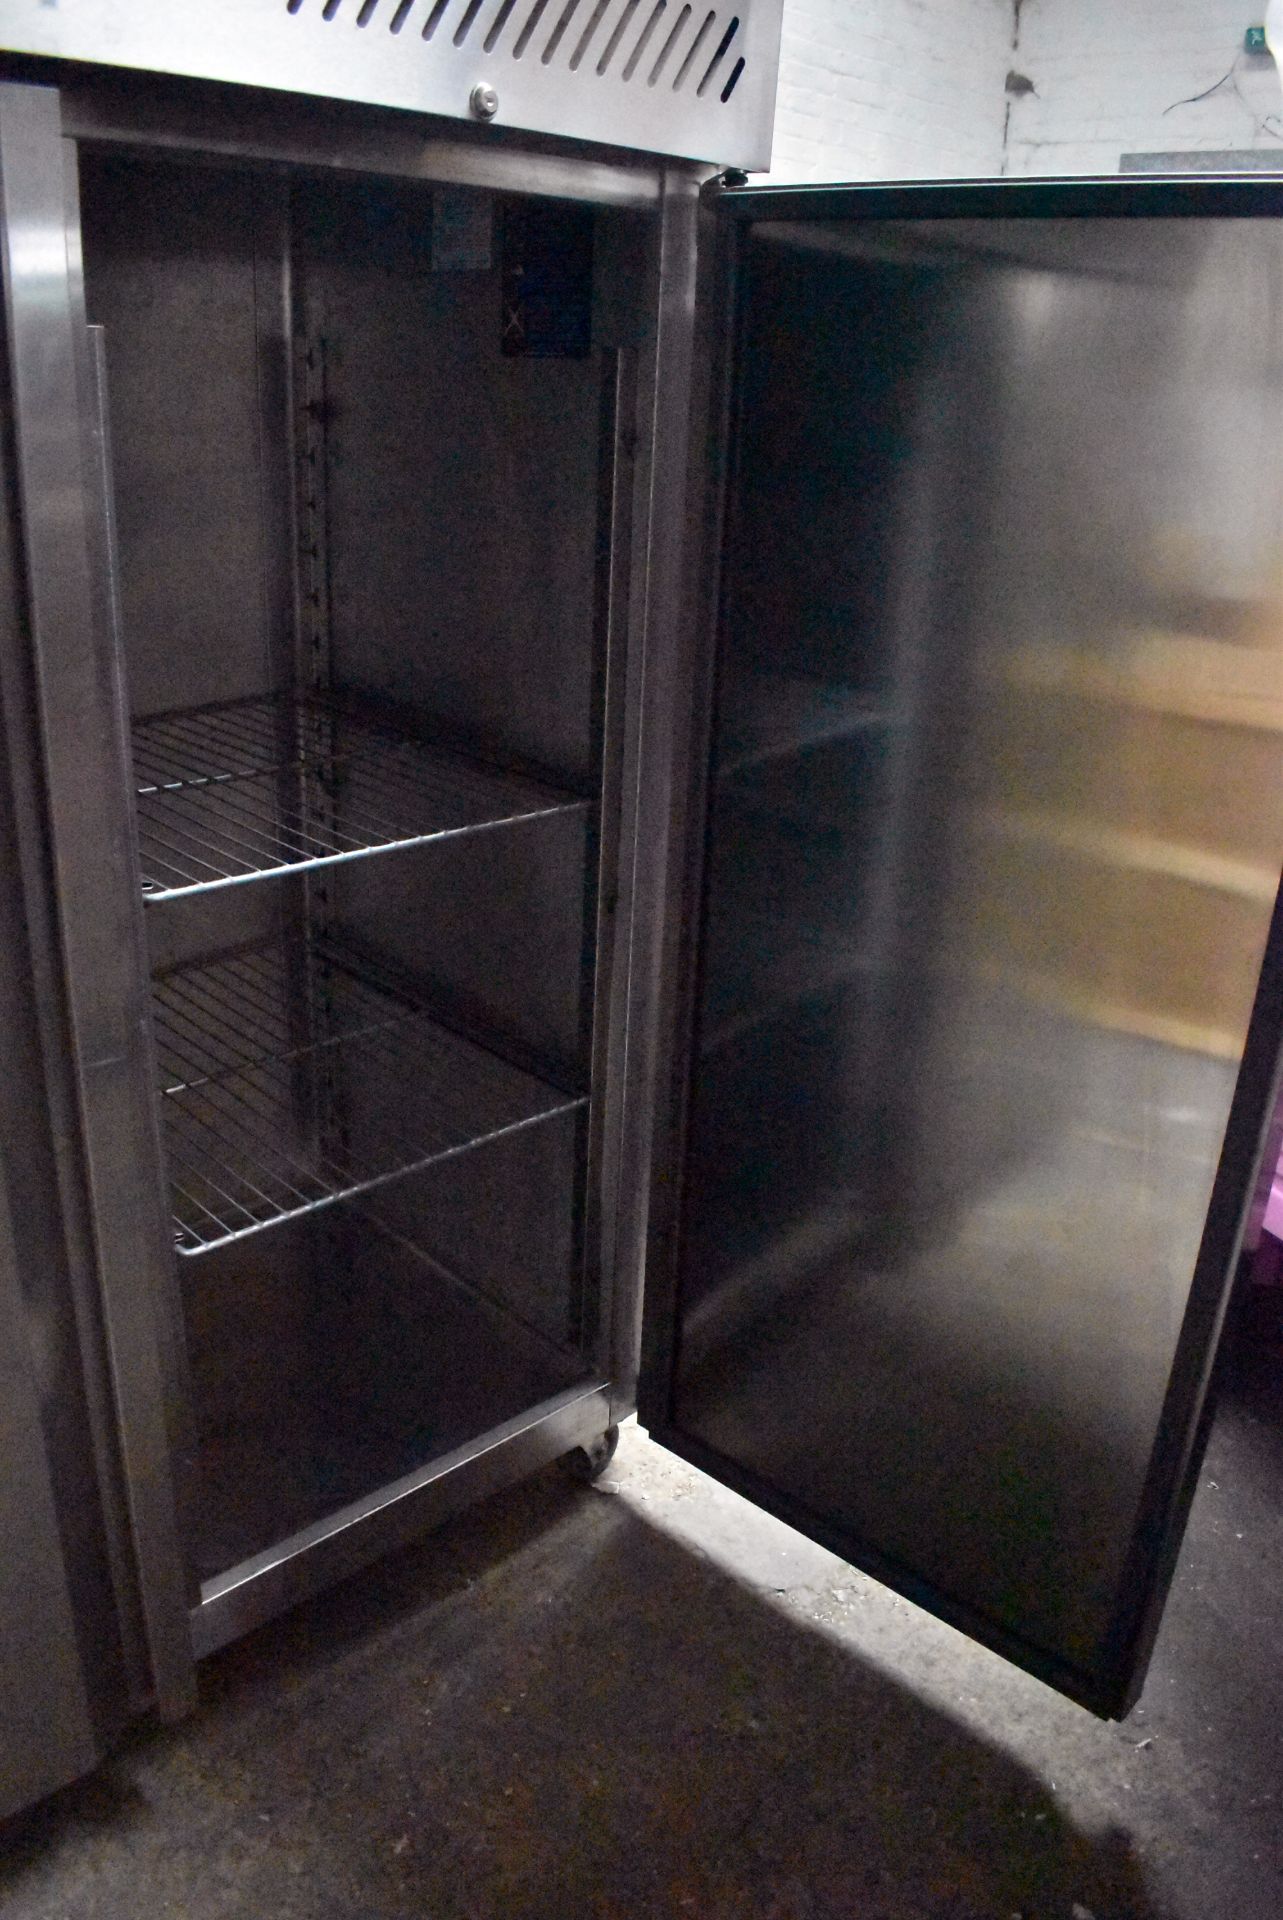 1 x Williams Jade Double Door Upright Refrigerator - 1295Ltr Capacity - Model MJ2-SA - Image 9 of 14